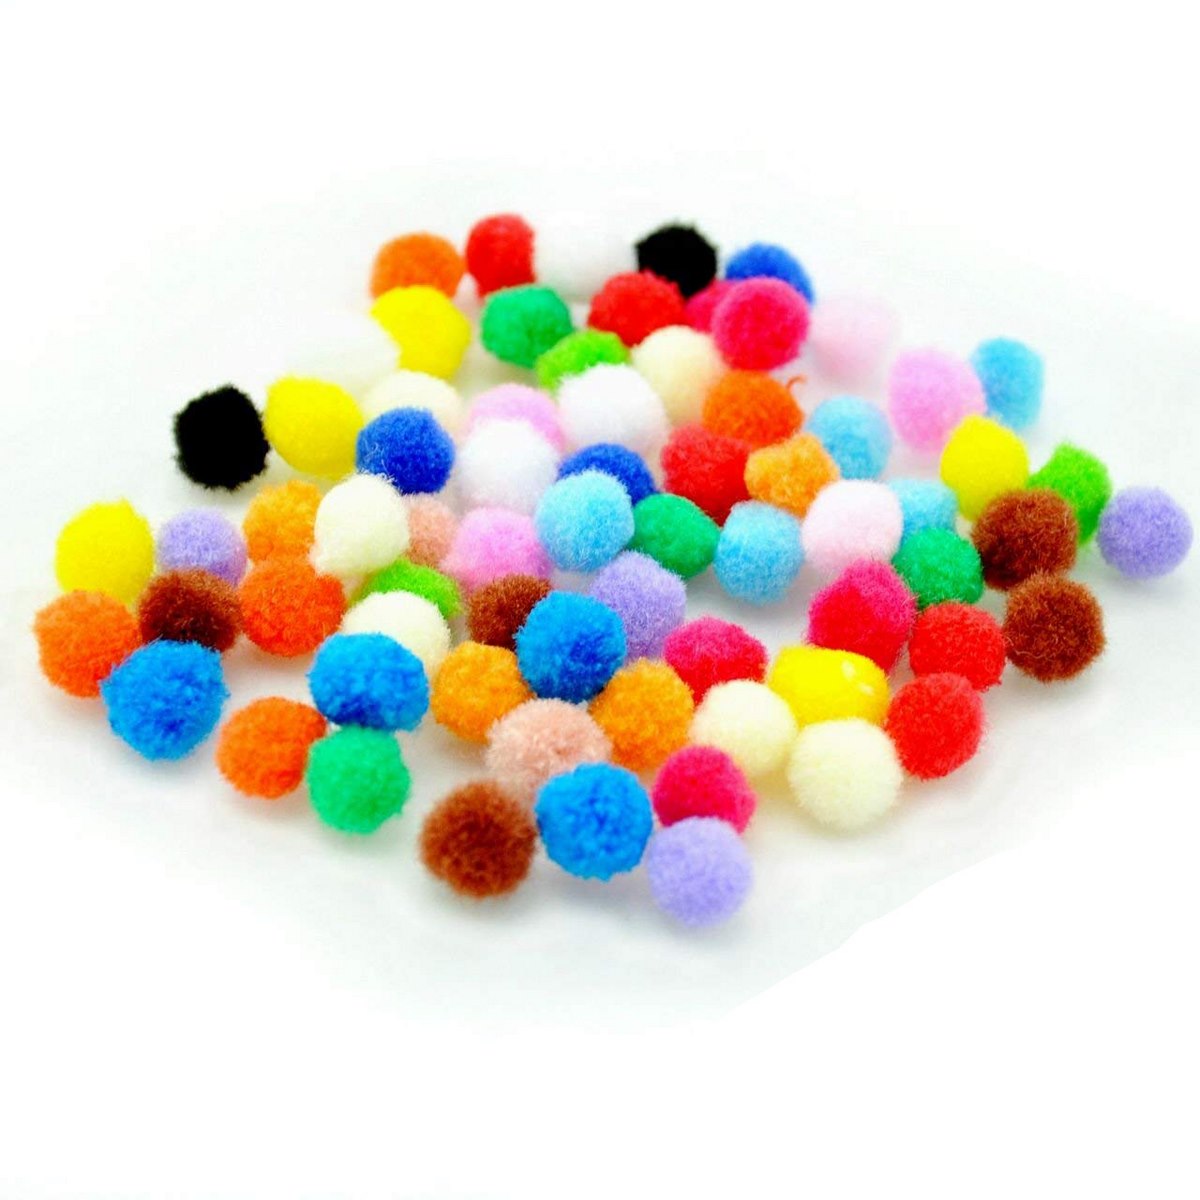 jags-mumbai Pompom & Pipe cleaner Craft Pom Pom Ball Small 1mm 1000pcs